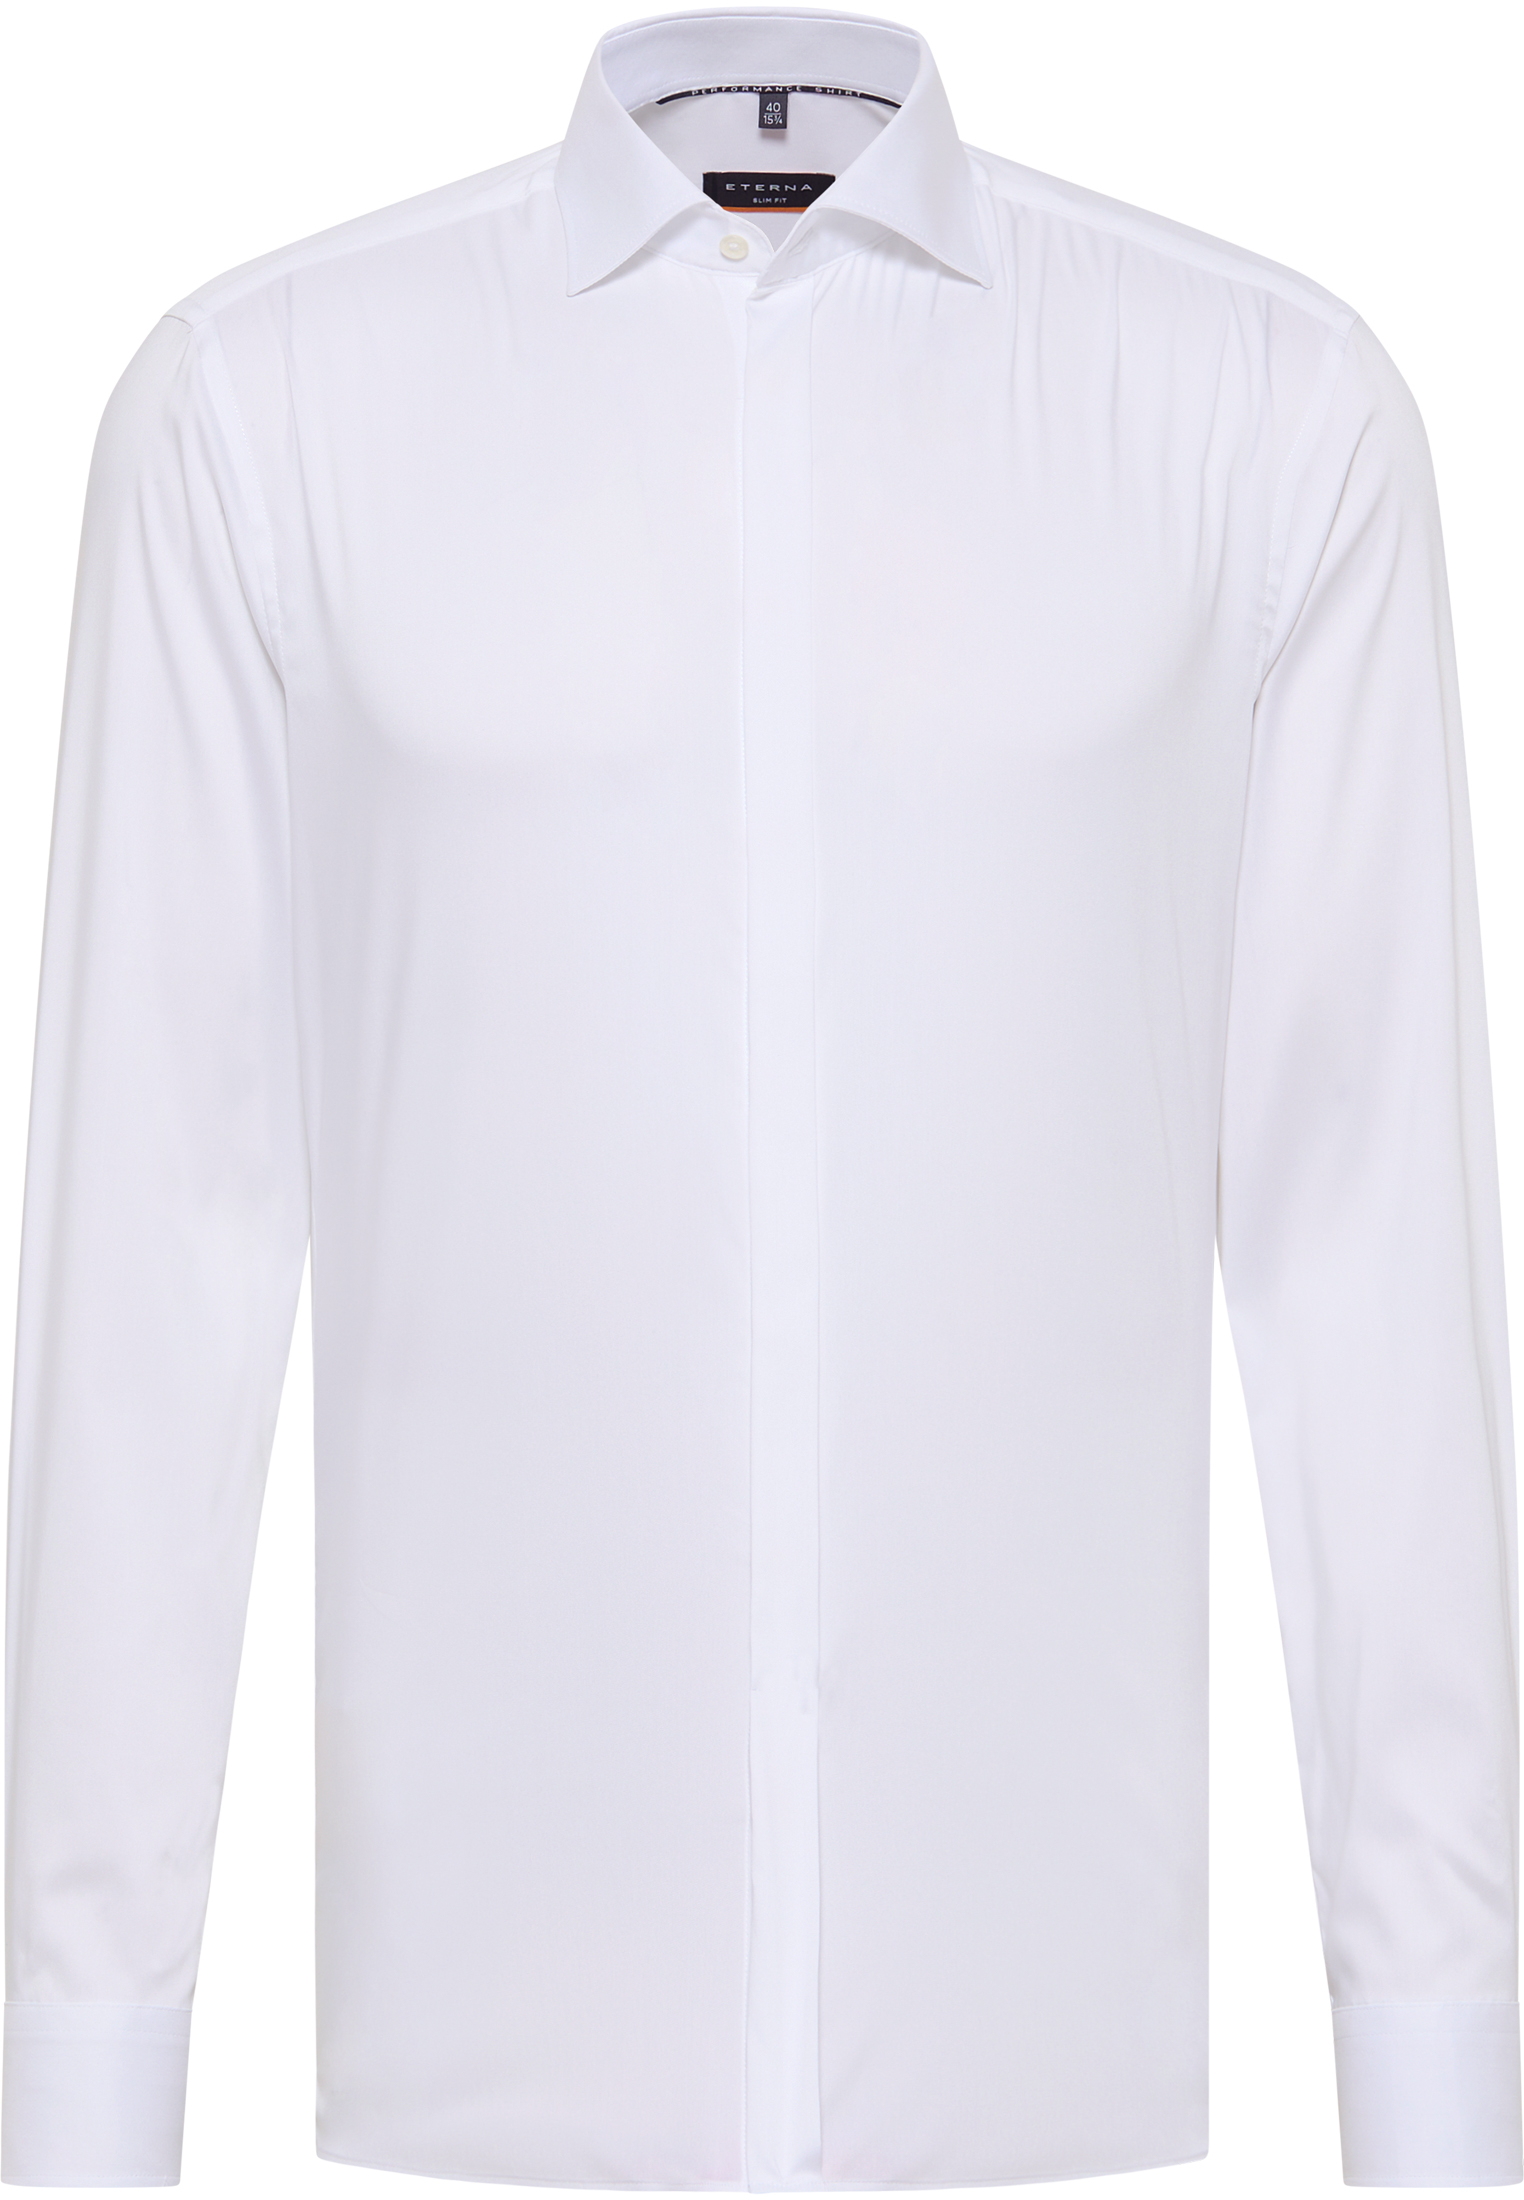 SLIM FIT Performance Shirt blanc uni